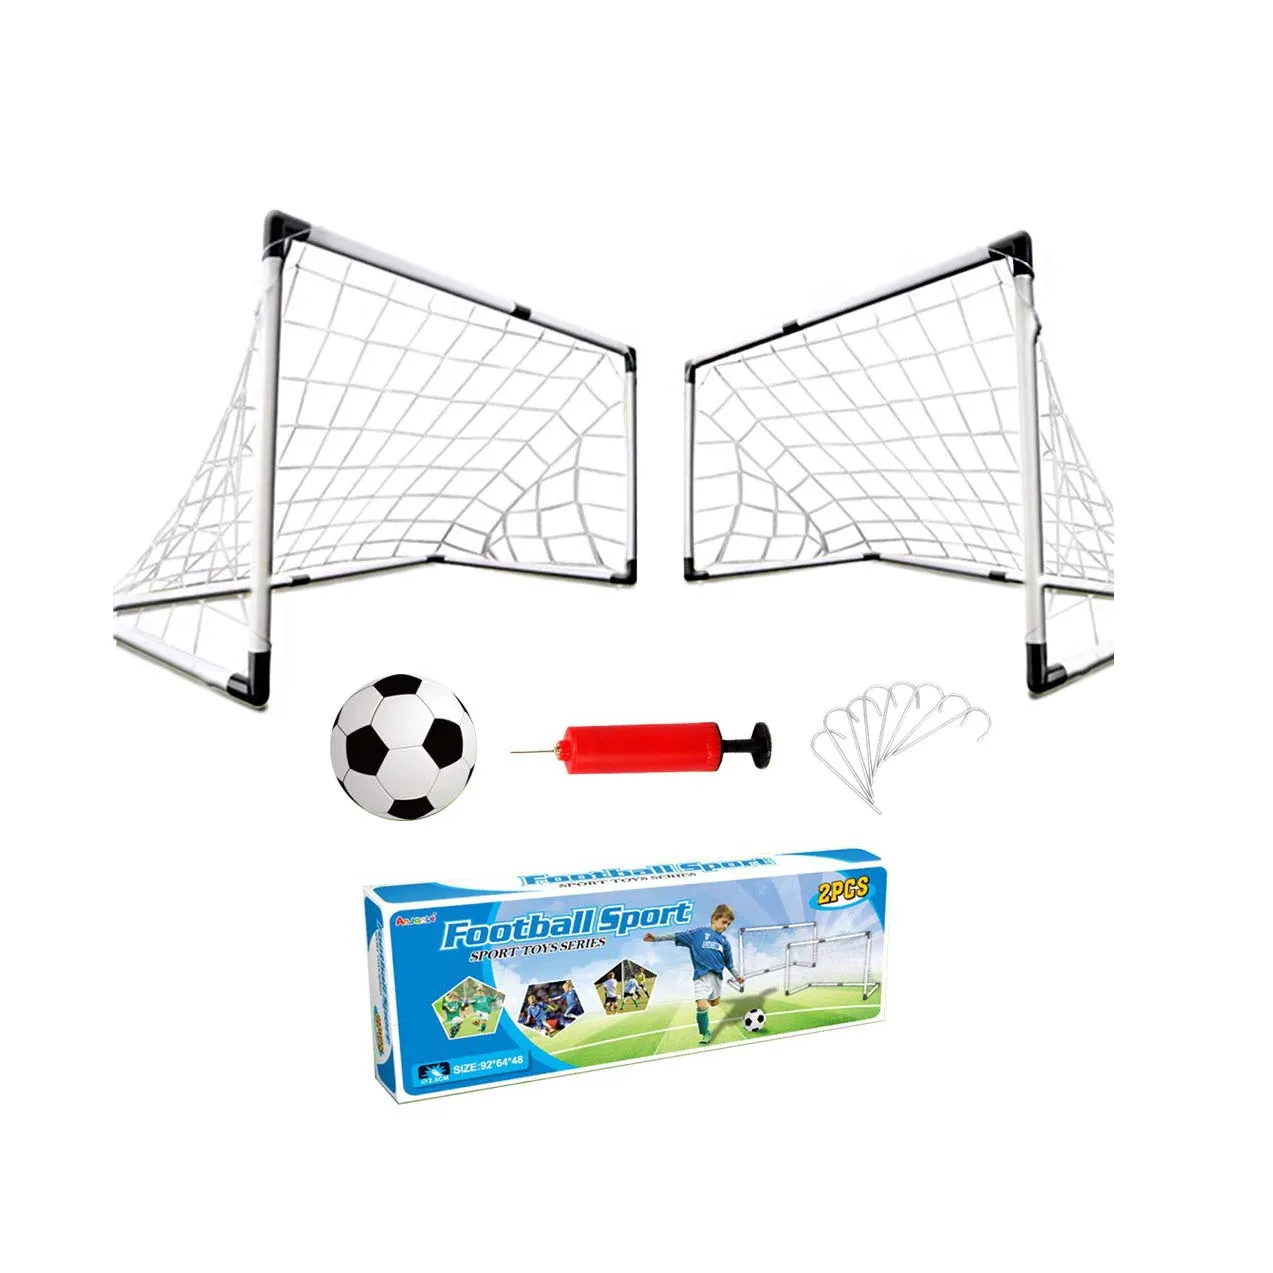 Goal Wall Football Goal trainingstor Net with Ball Pump Power Set 2 Sizes